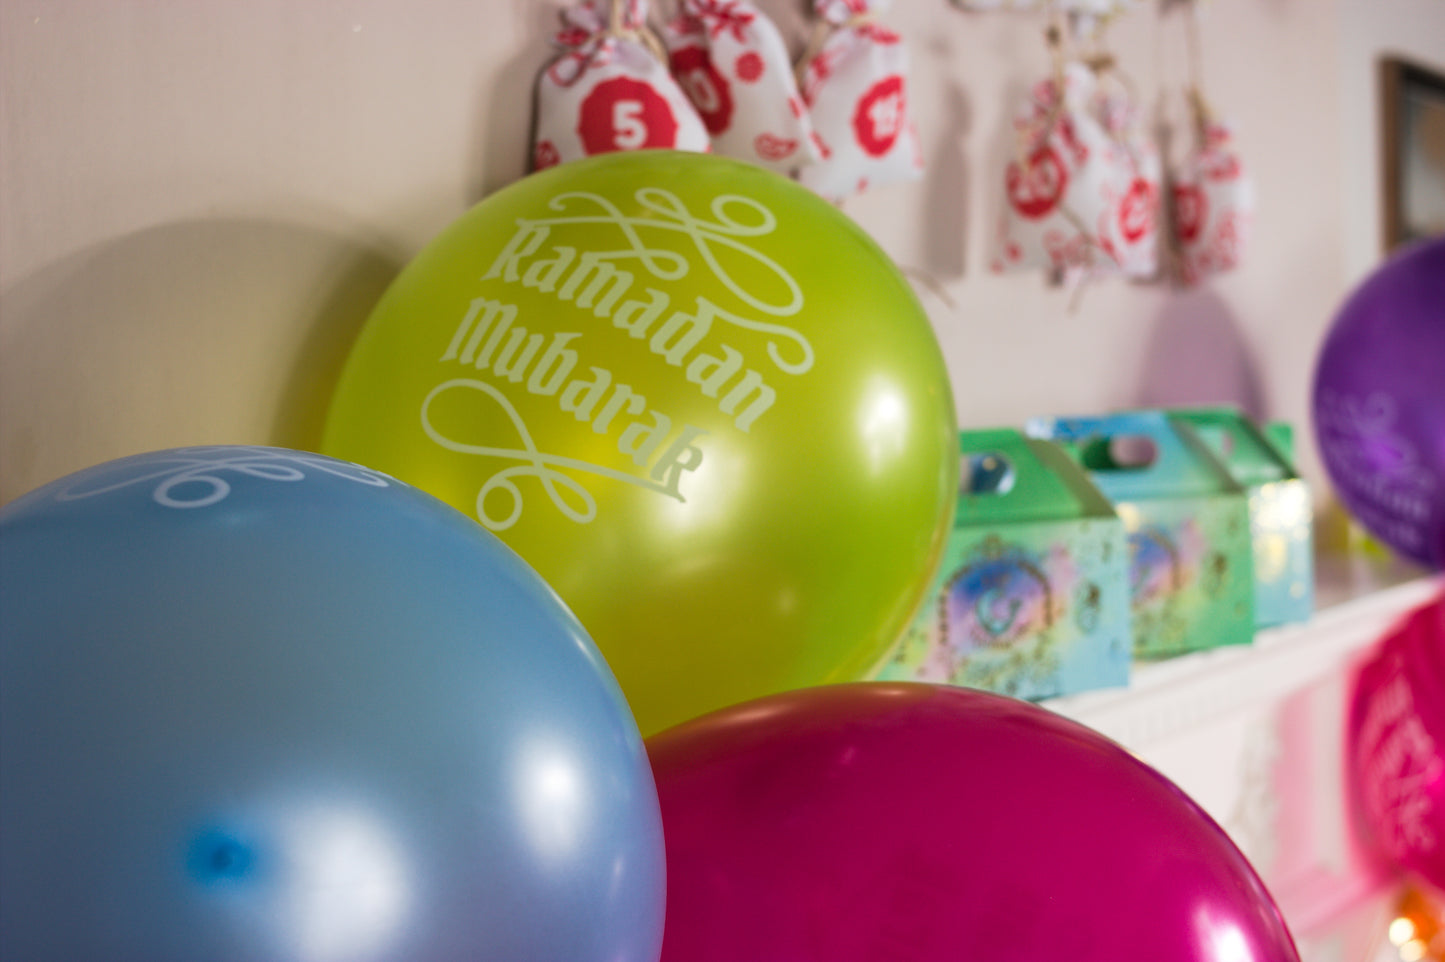 Ramadan Mubarak Balloons - Multi Coloured